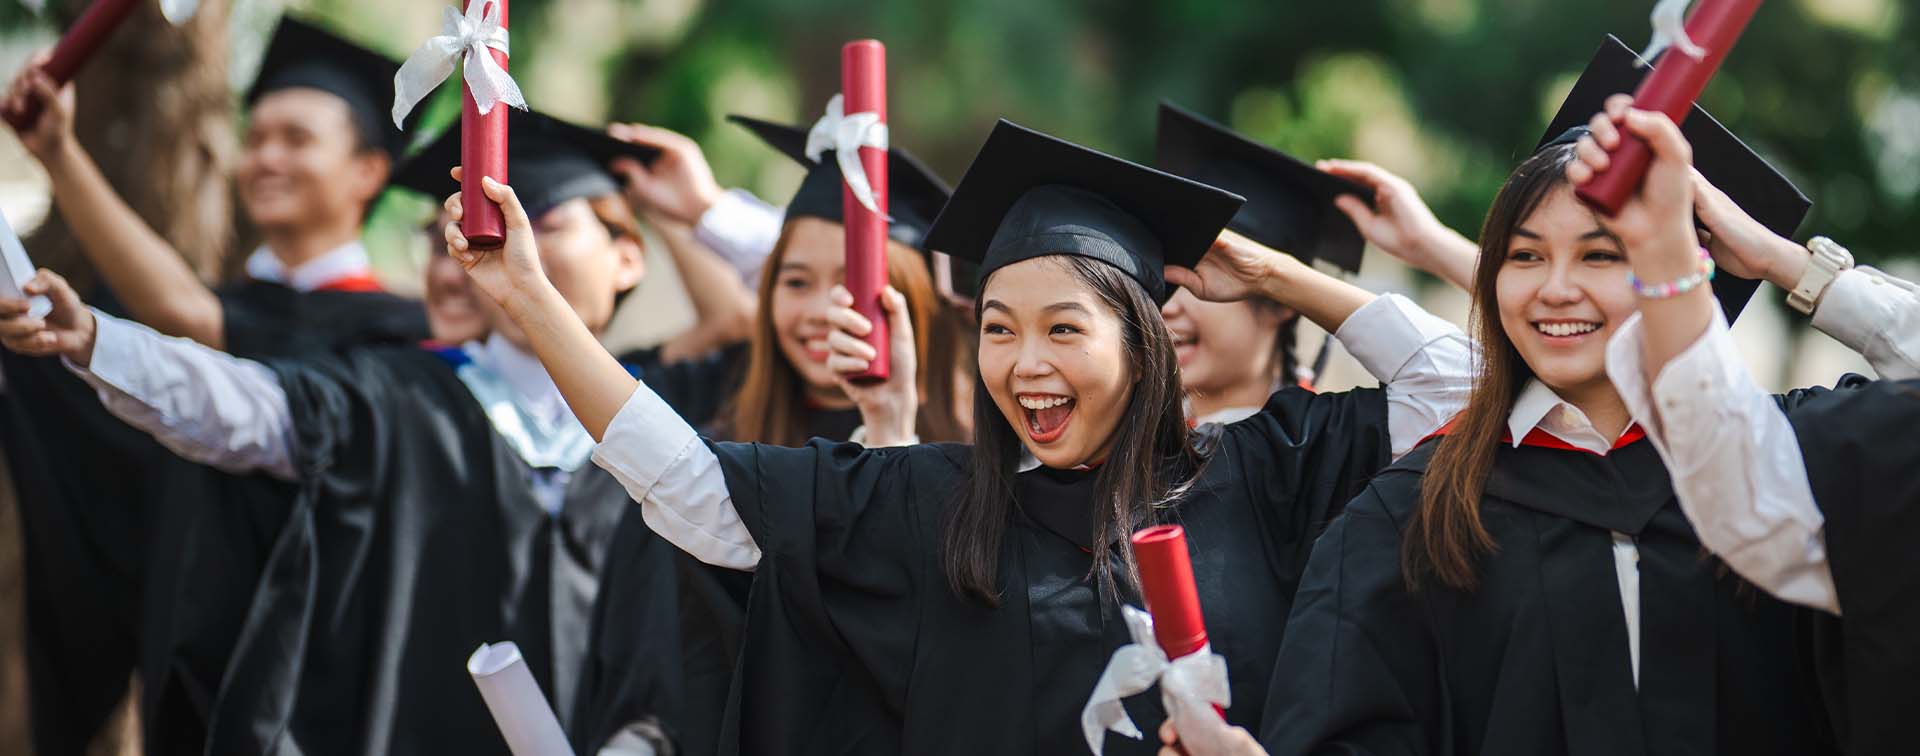 University students celebrating their graduation